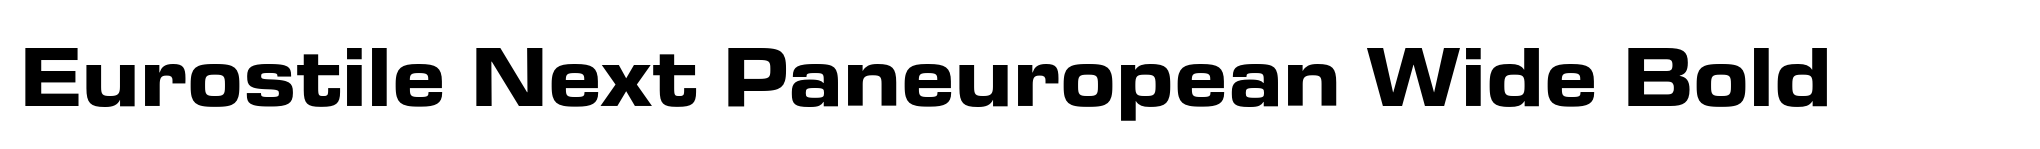 Eurostile Next Paneuropean Wide Bold image